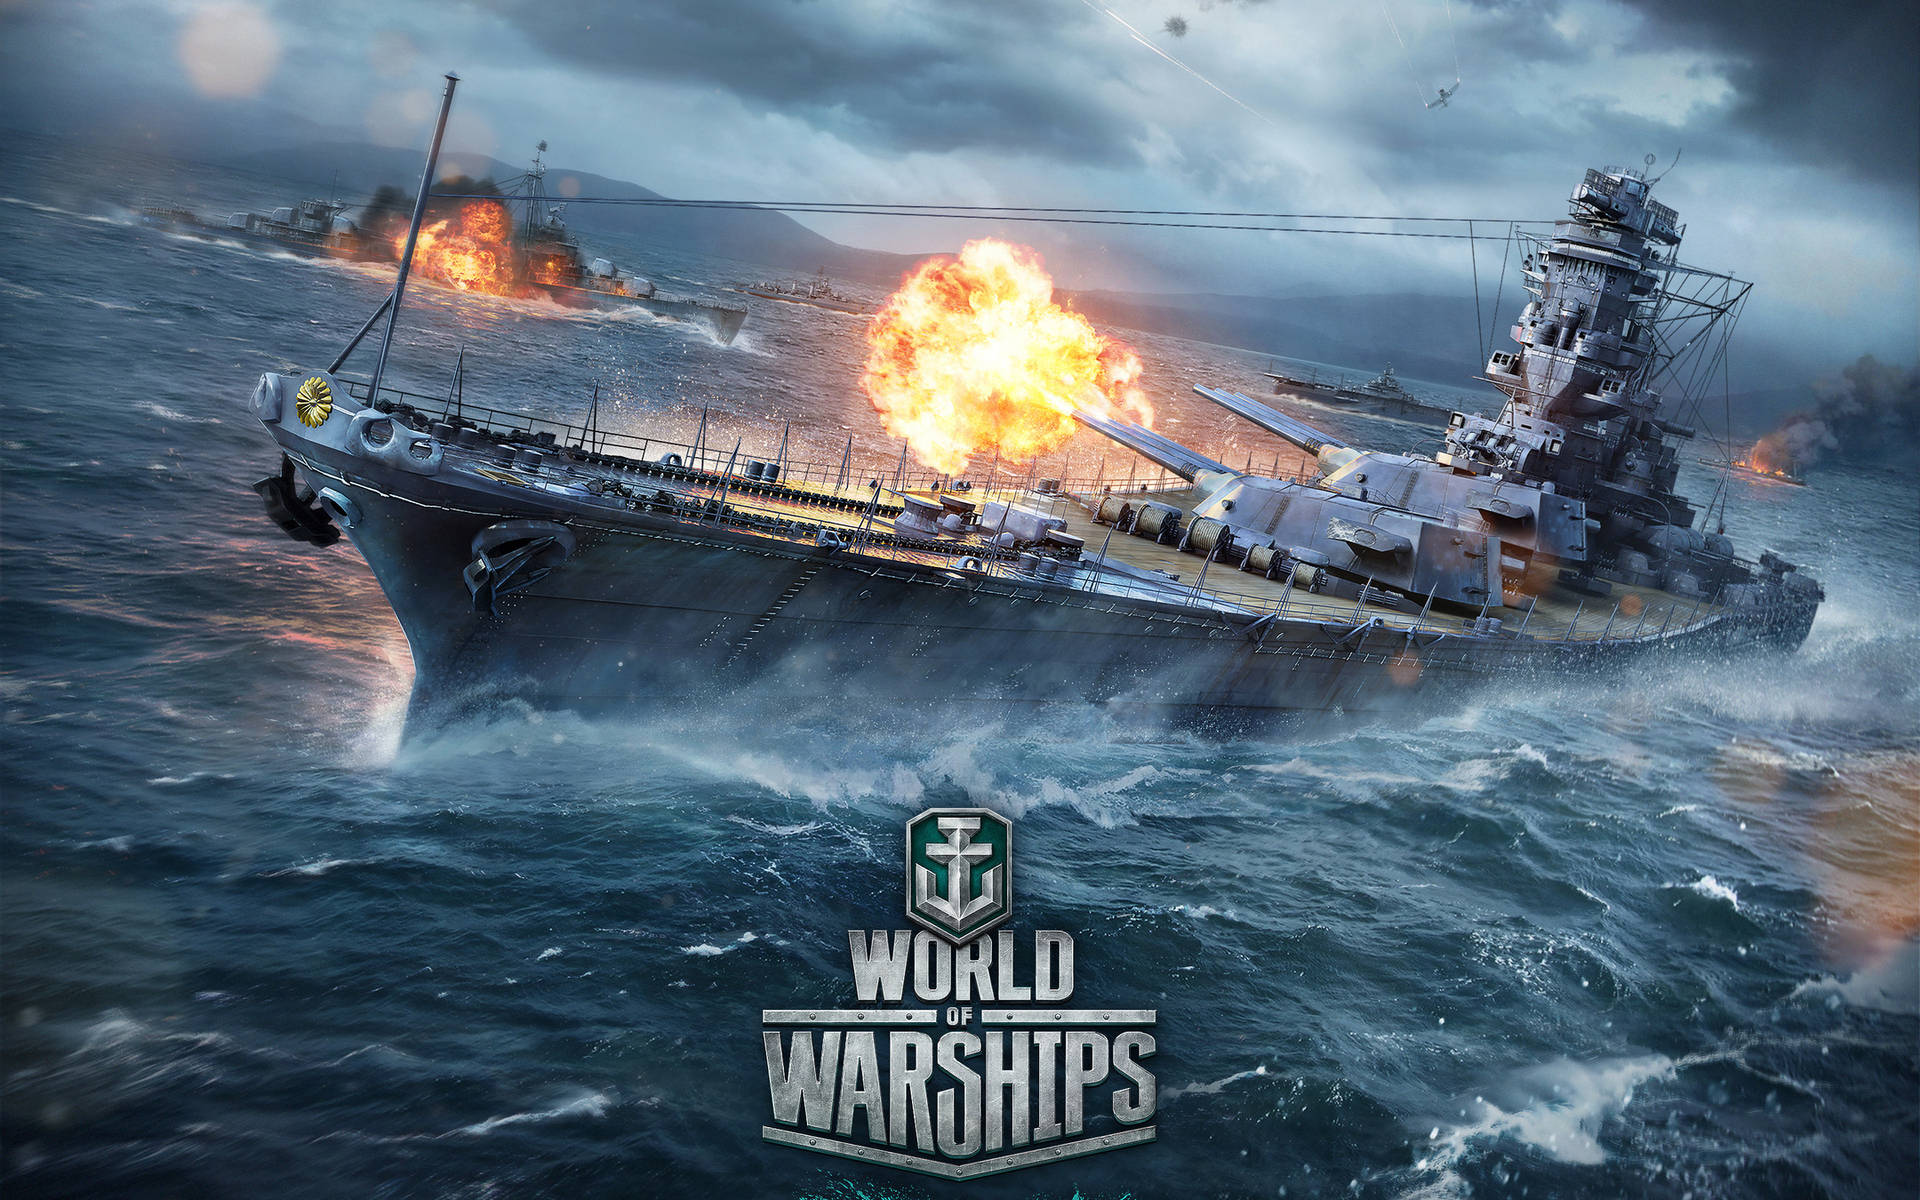 Verdens Krigsskibe Plakat Tapet: Tag på en rejse til et episk eventyr med et Verdens Krigsskibe plakat tapet. Wallpaper